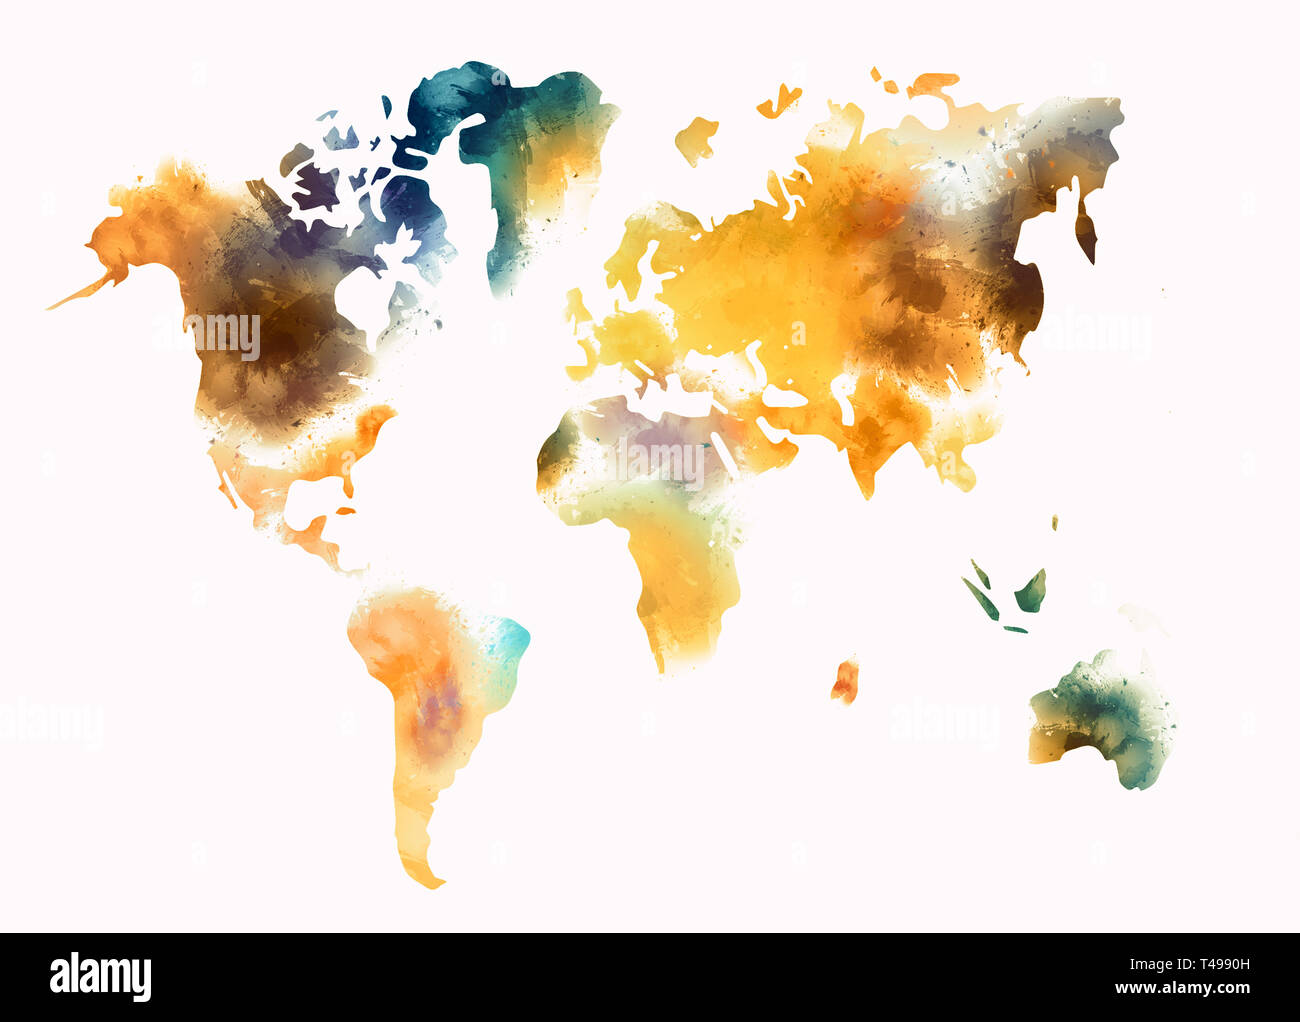 world map watercolor illustration Stock Photo